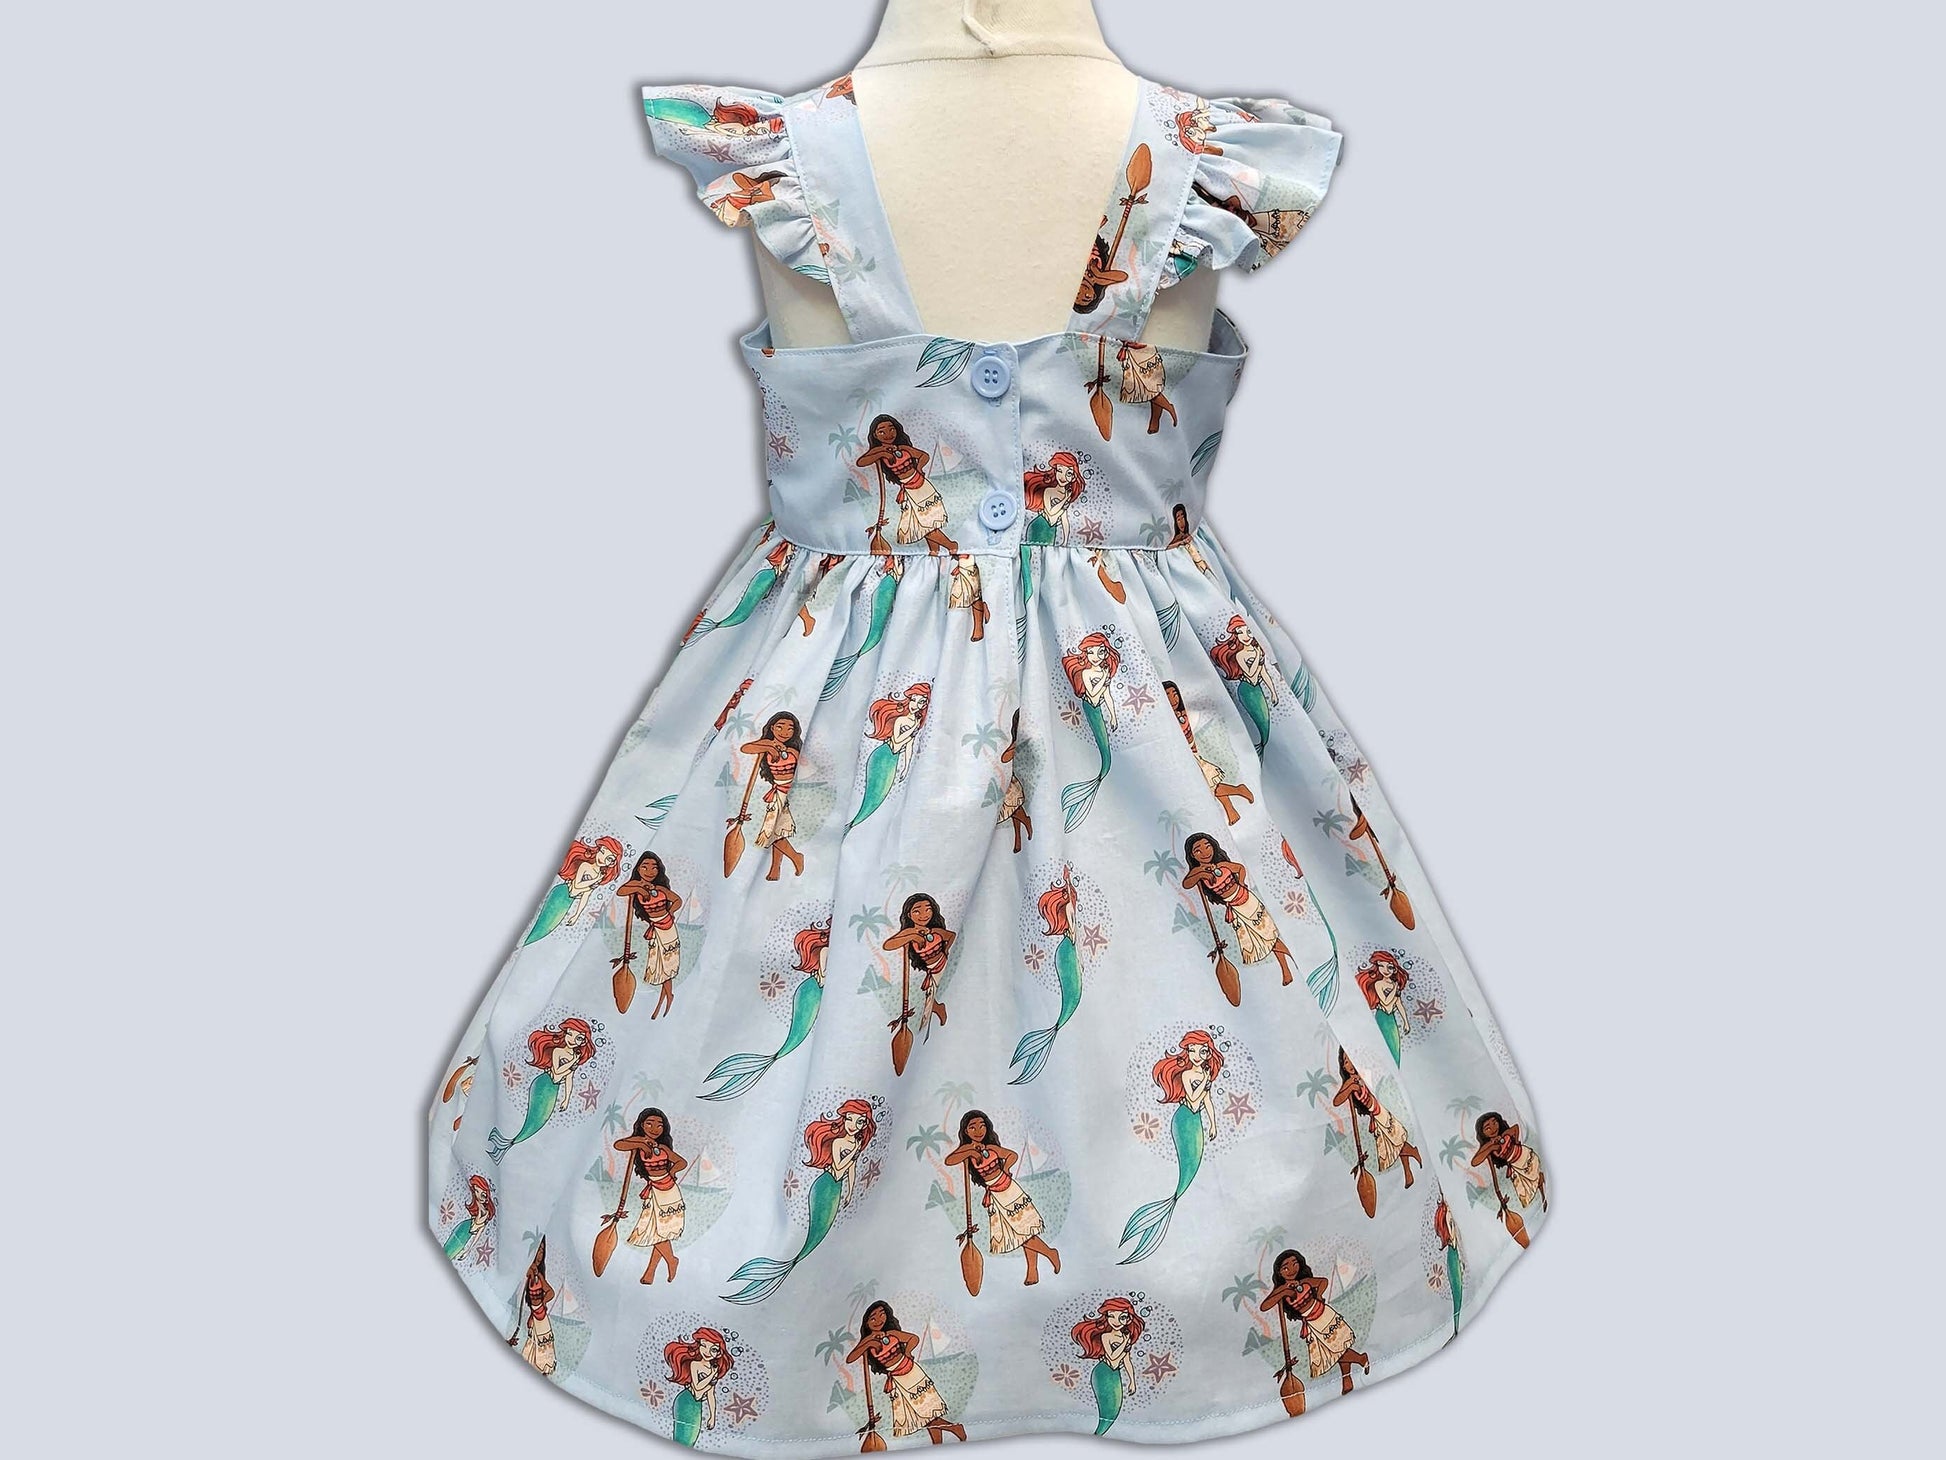 Little Mermaid Dress